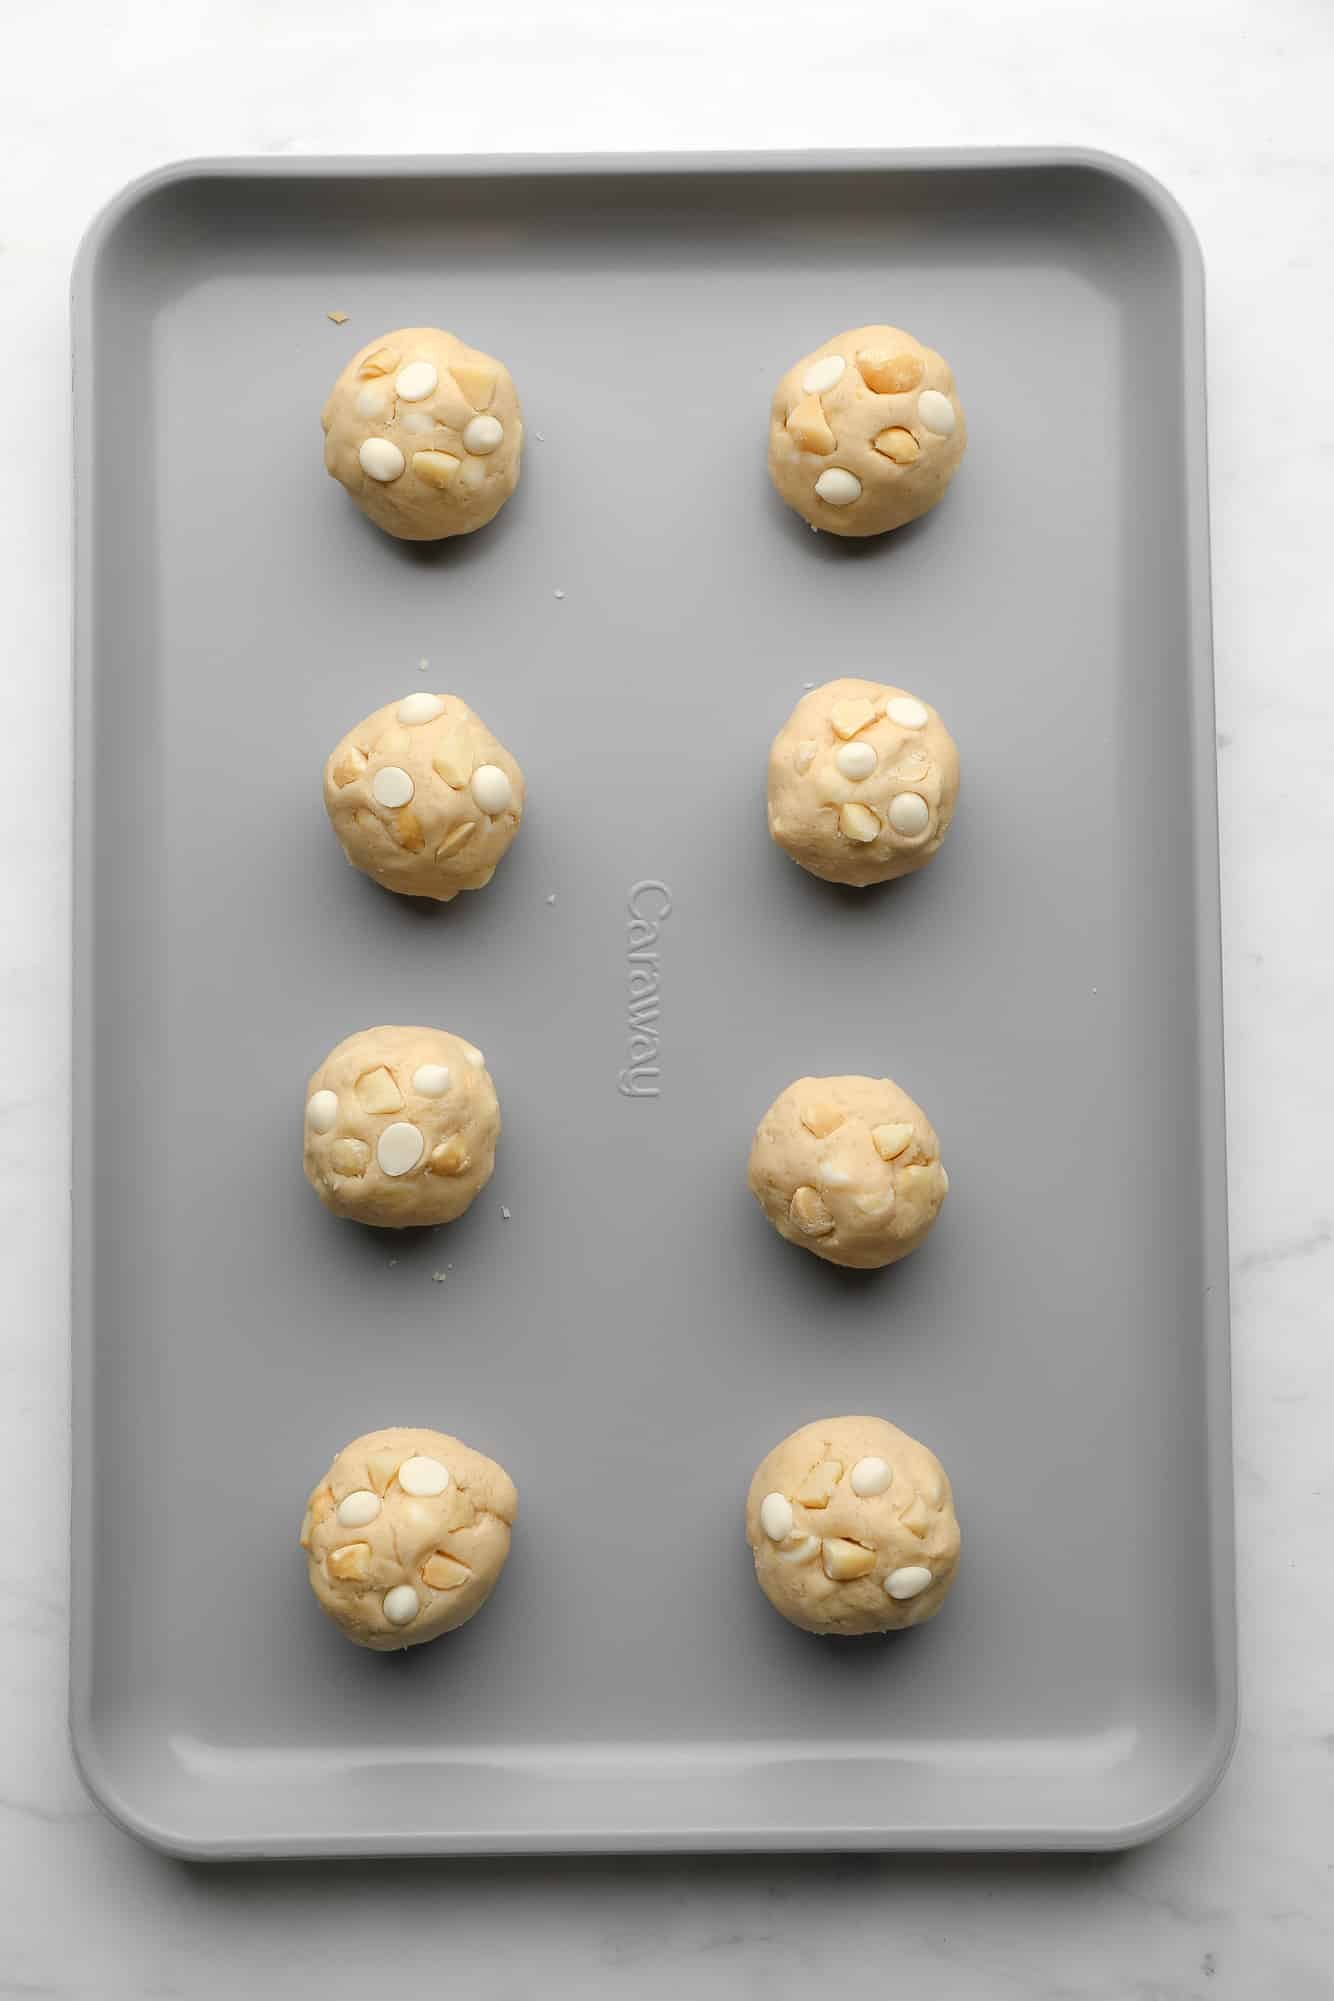 Vegan White Chocolate Macadamia Nut Cookie dough balls on a metal baking sheet.